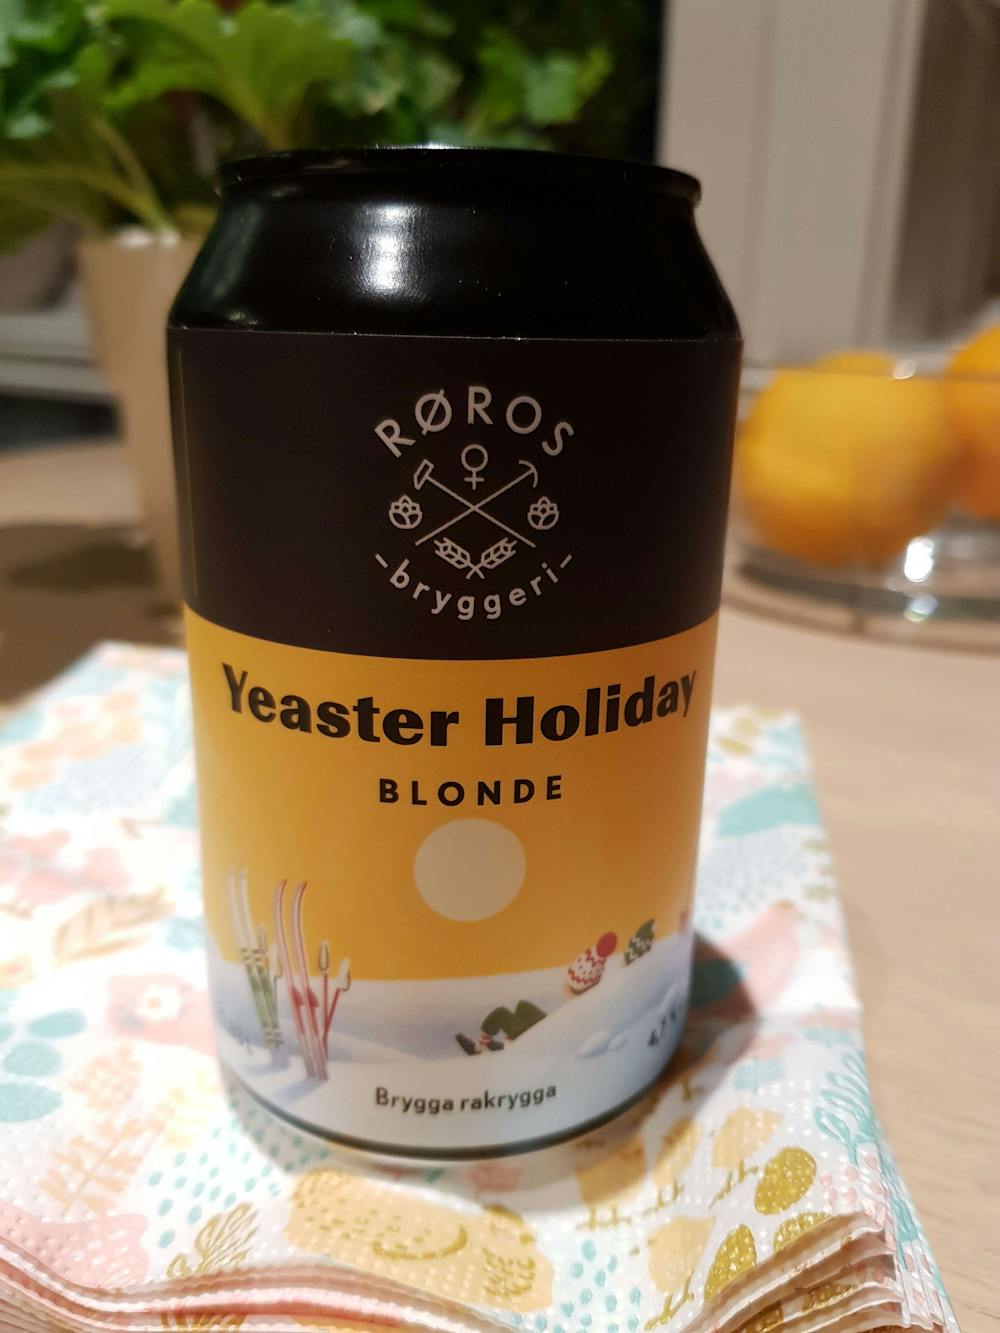 Yeaster holiday blonde, Røros bryggeri